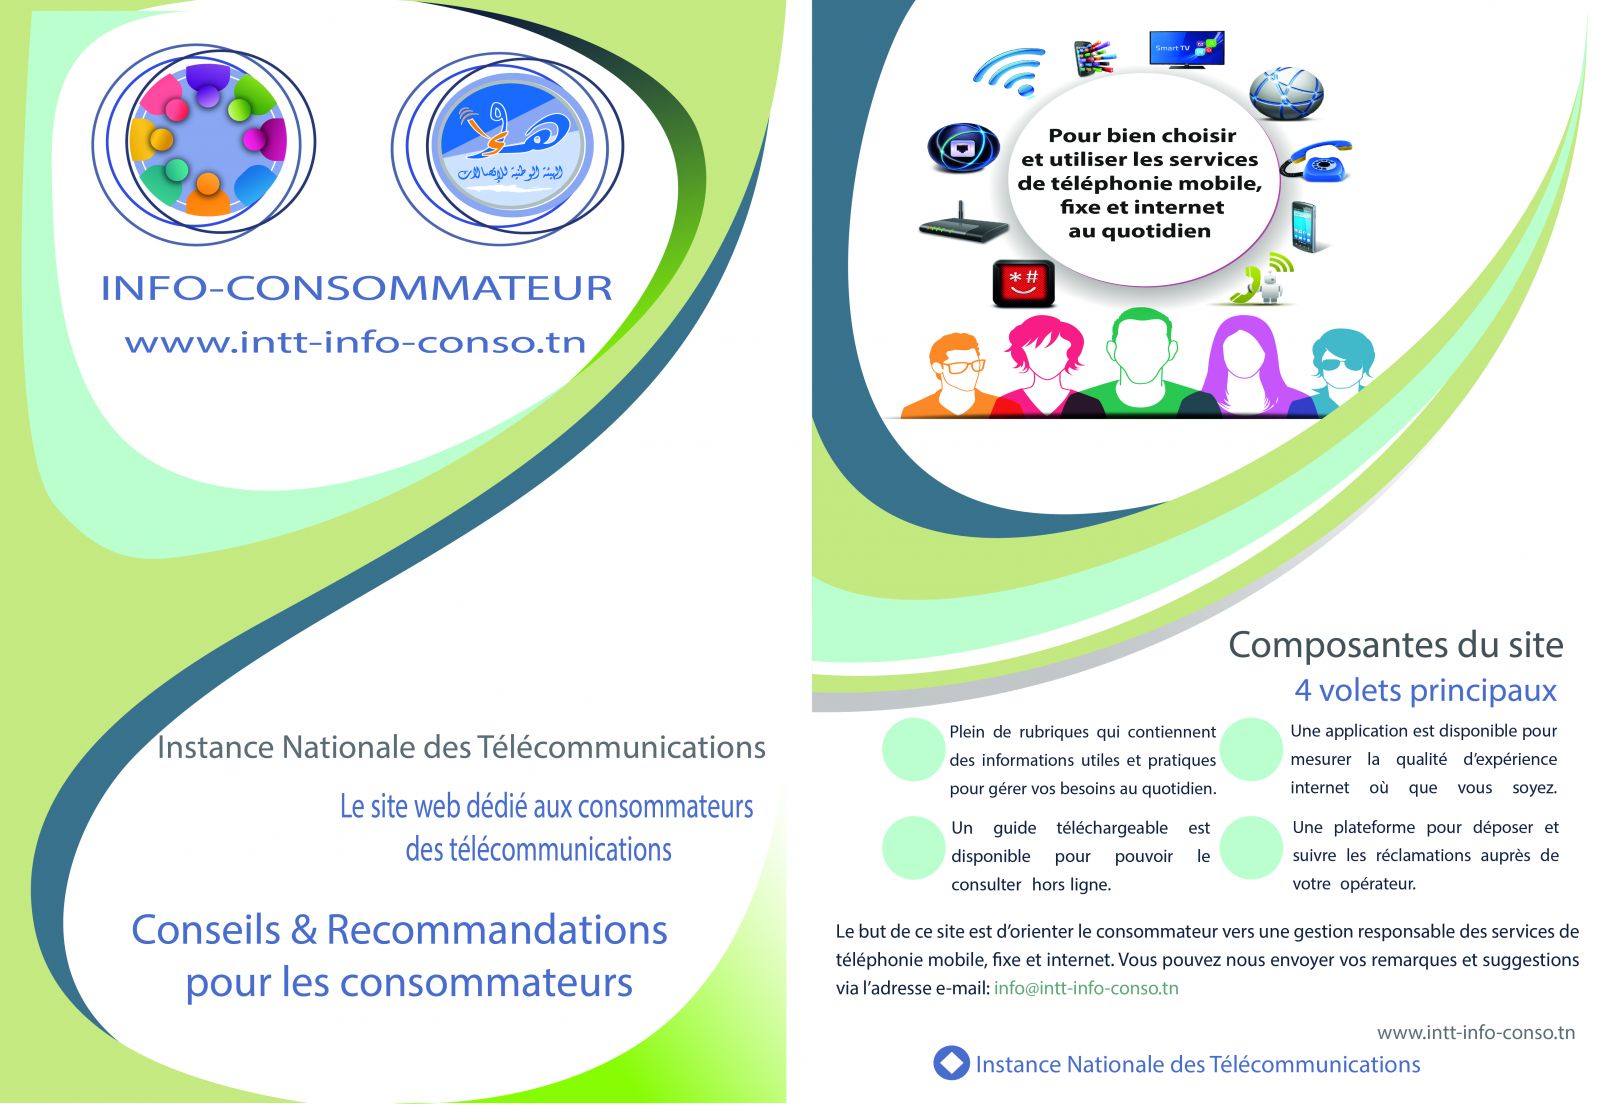 www.intt-info-conso.tn